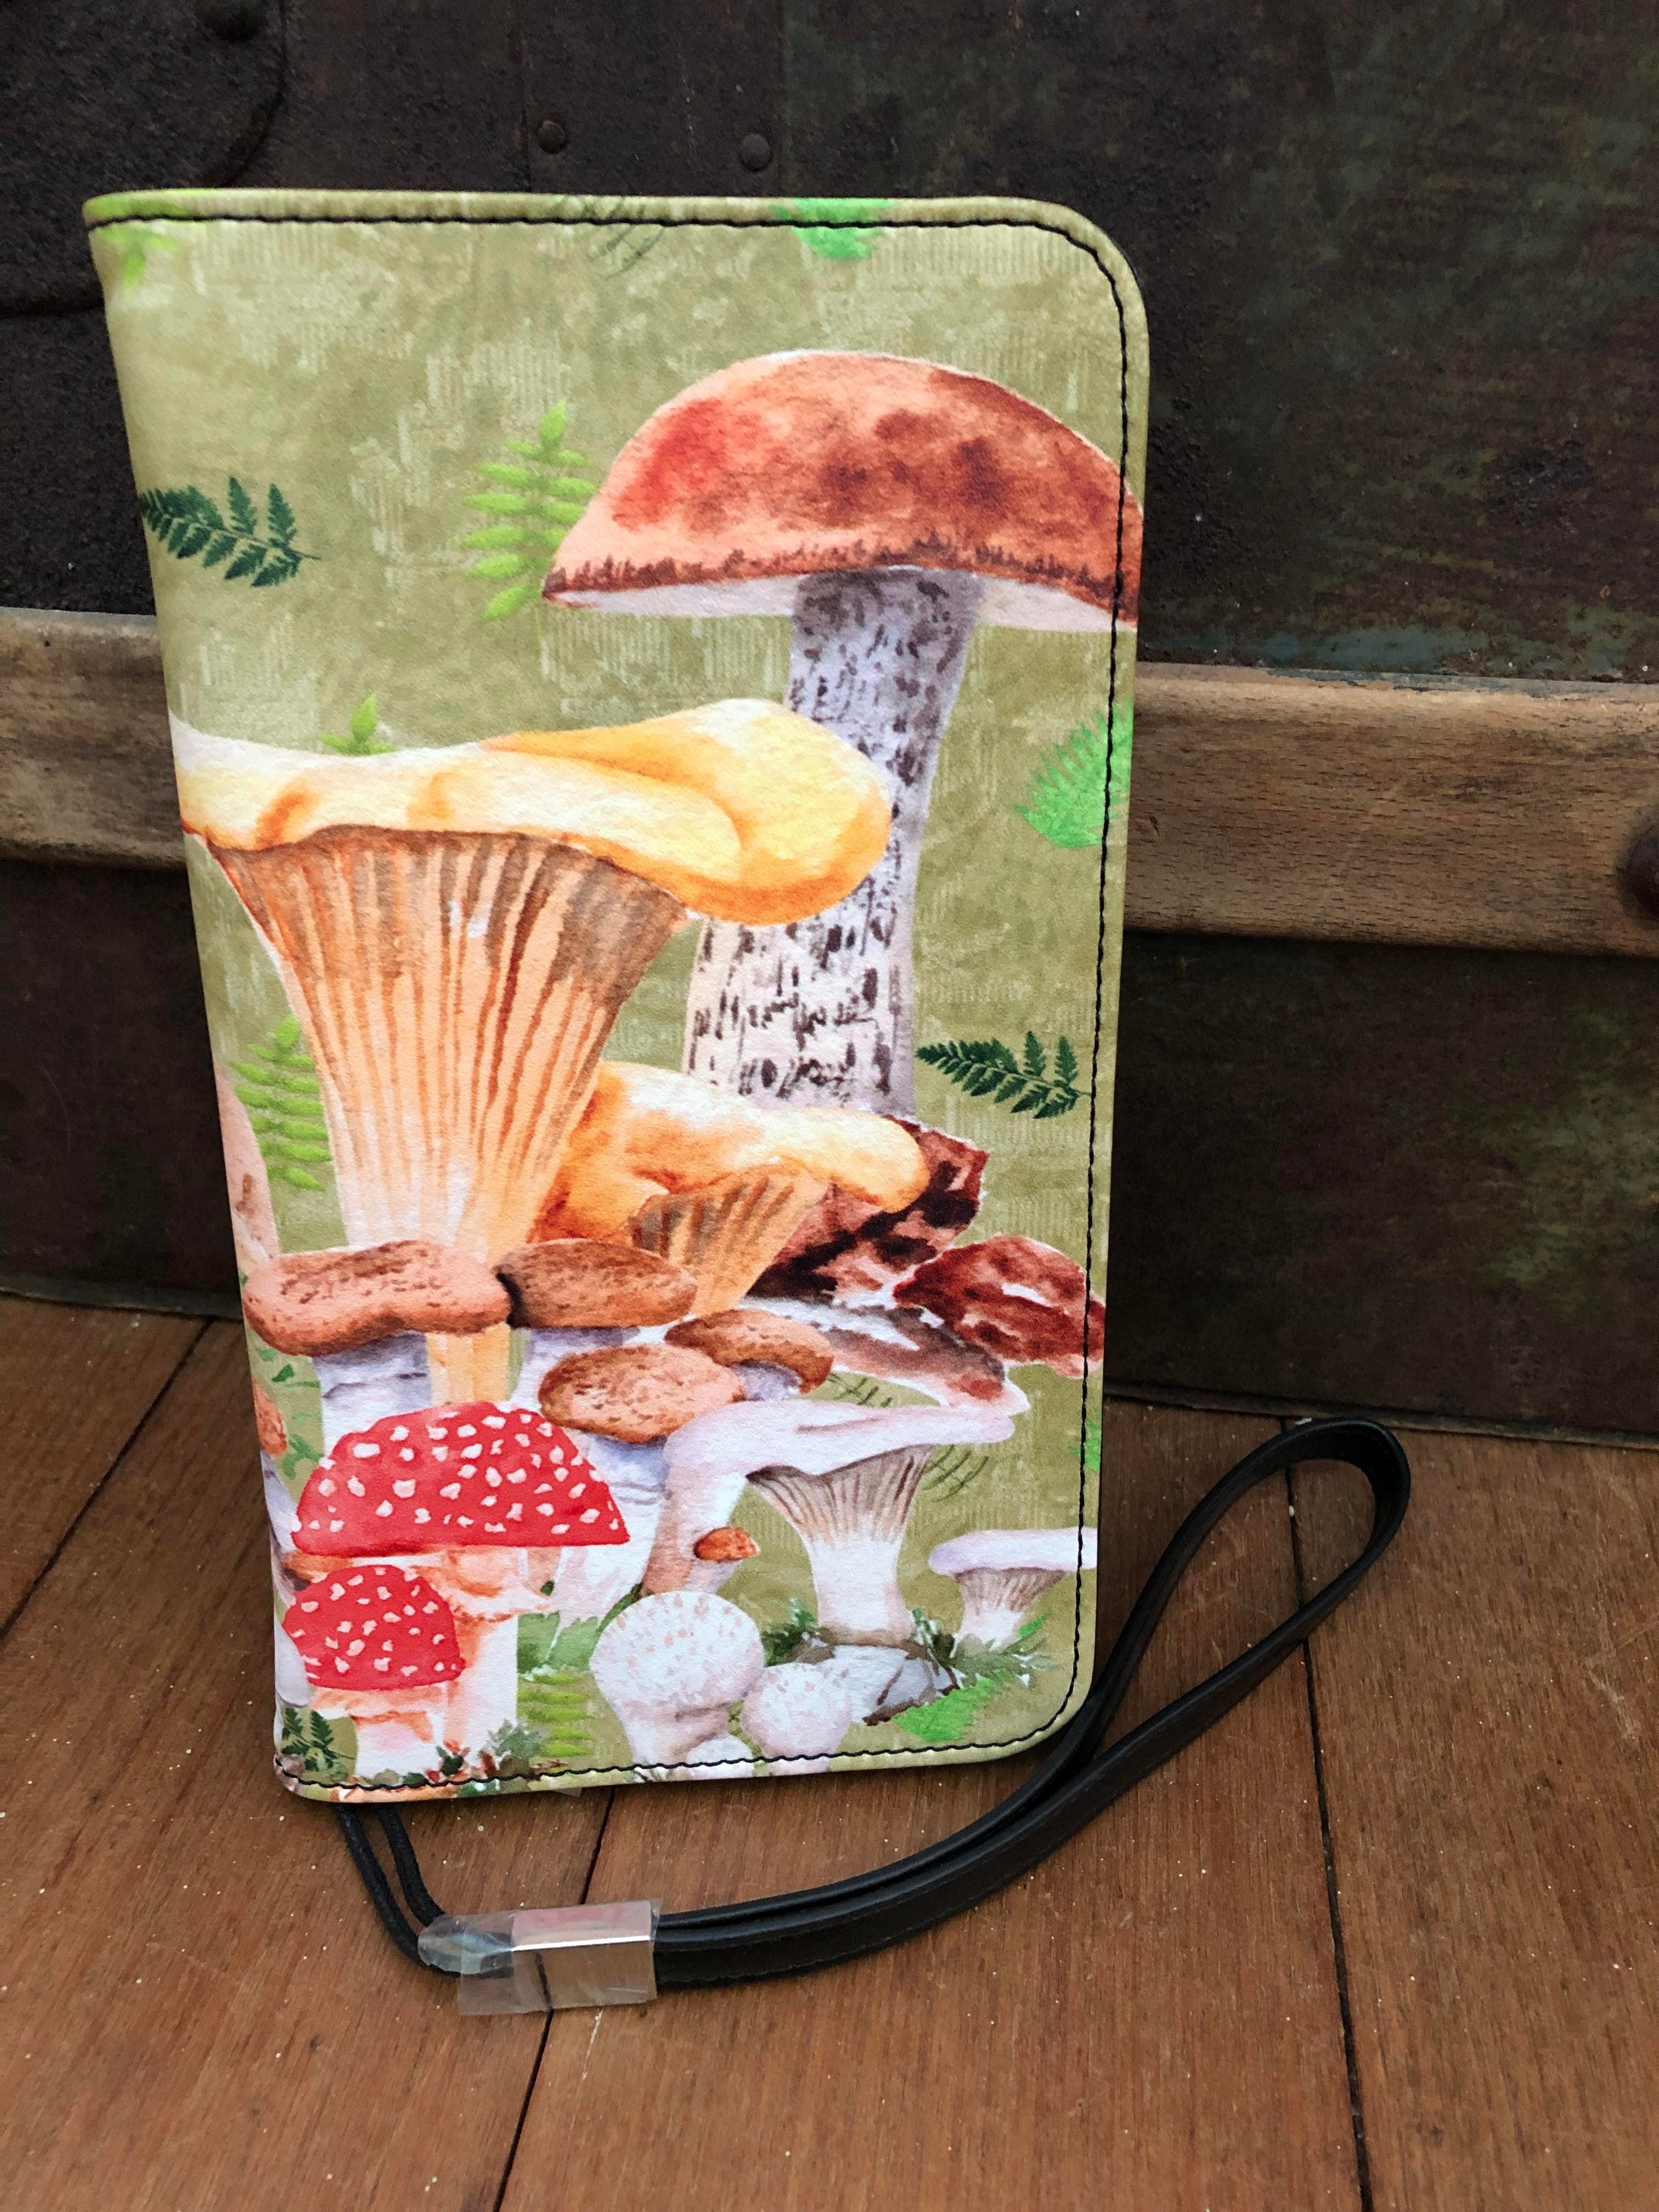 Mushrooms - Clutch Purse Large